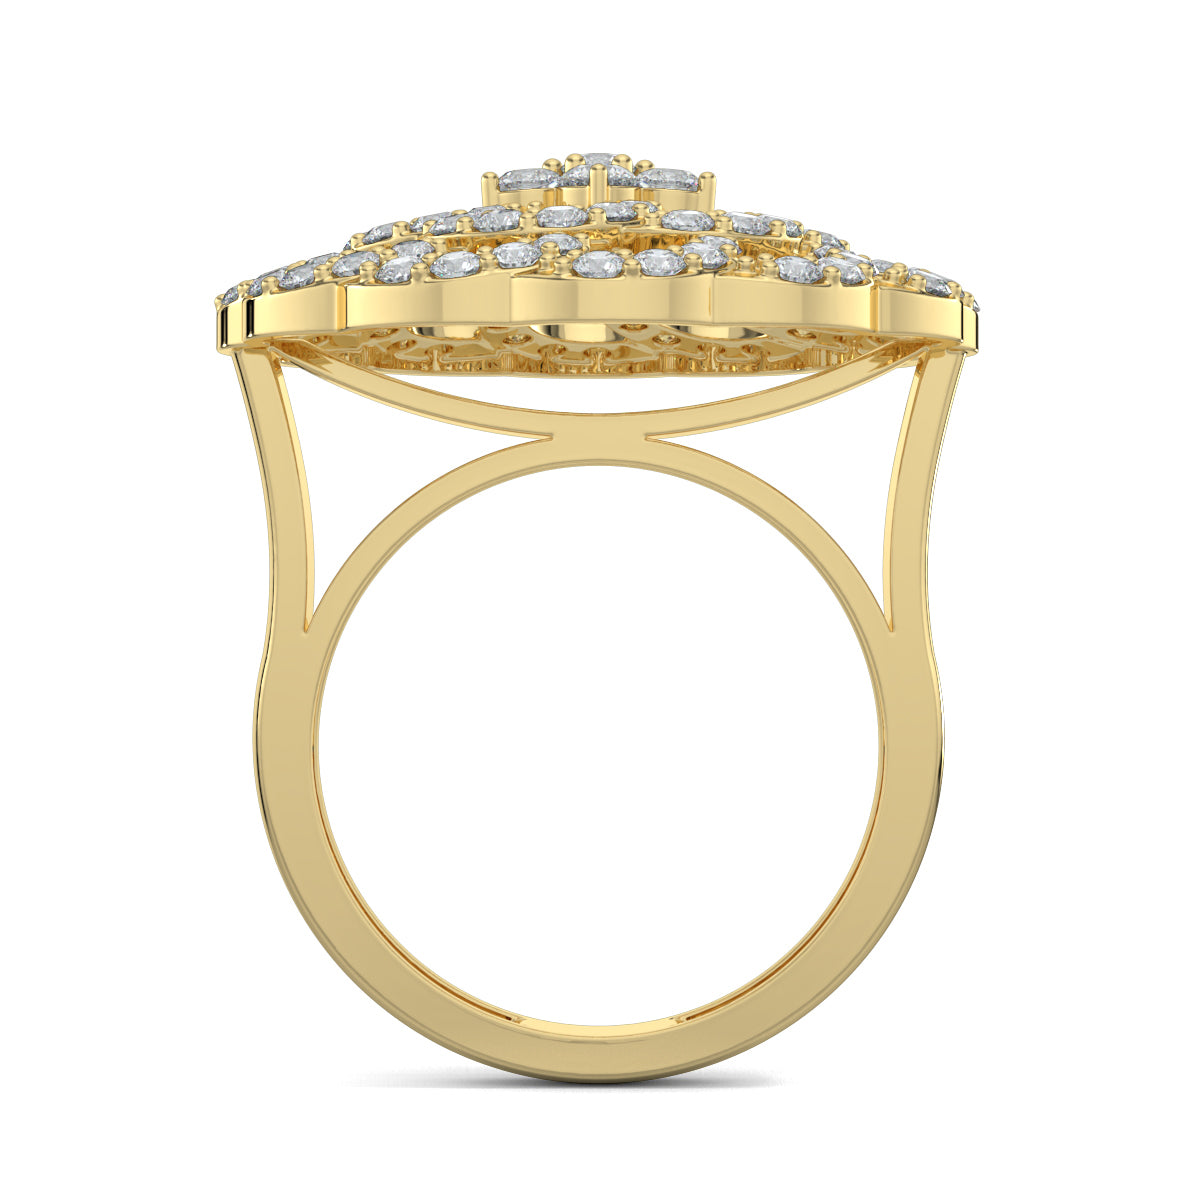 Yellow Gold, Diamond Ring, Natural diamond ring, Blossom Burst Diamond Ring, Lab-Grown Diamonds, Floral Inspired Ring, Diamond Encrusted Ring, Cocktail Jewelry, Statement Ring, Elegant Band Ring, Sparkling Flower Ring